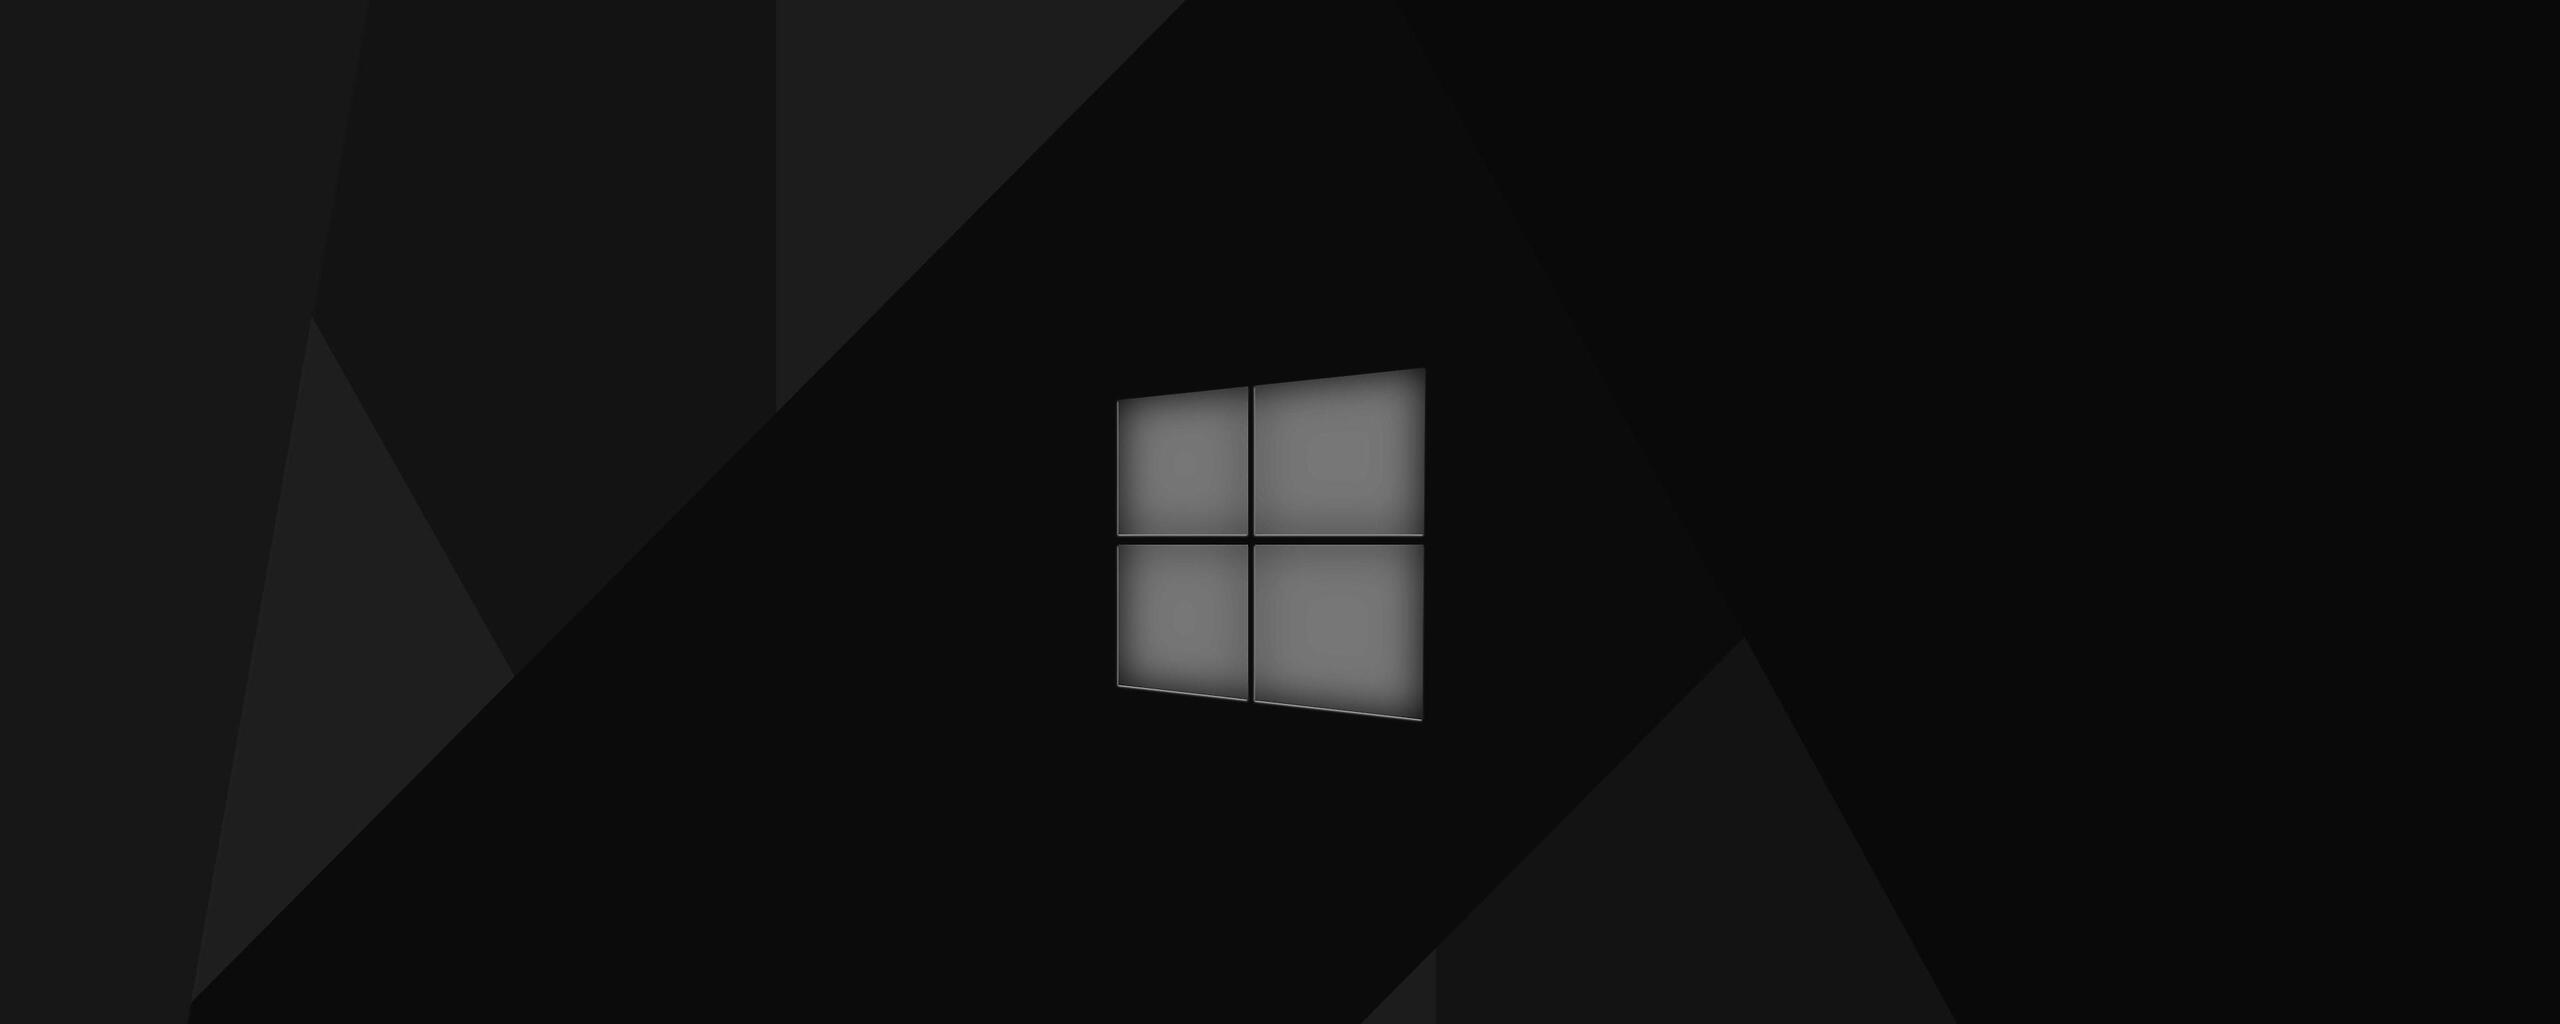 windows-10-material-design-4k-o1.jpg